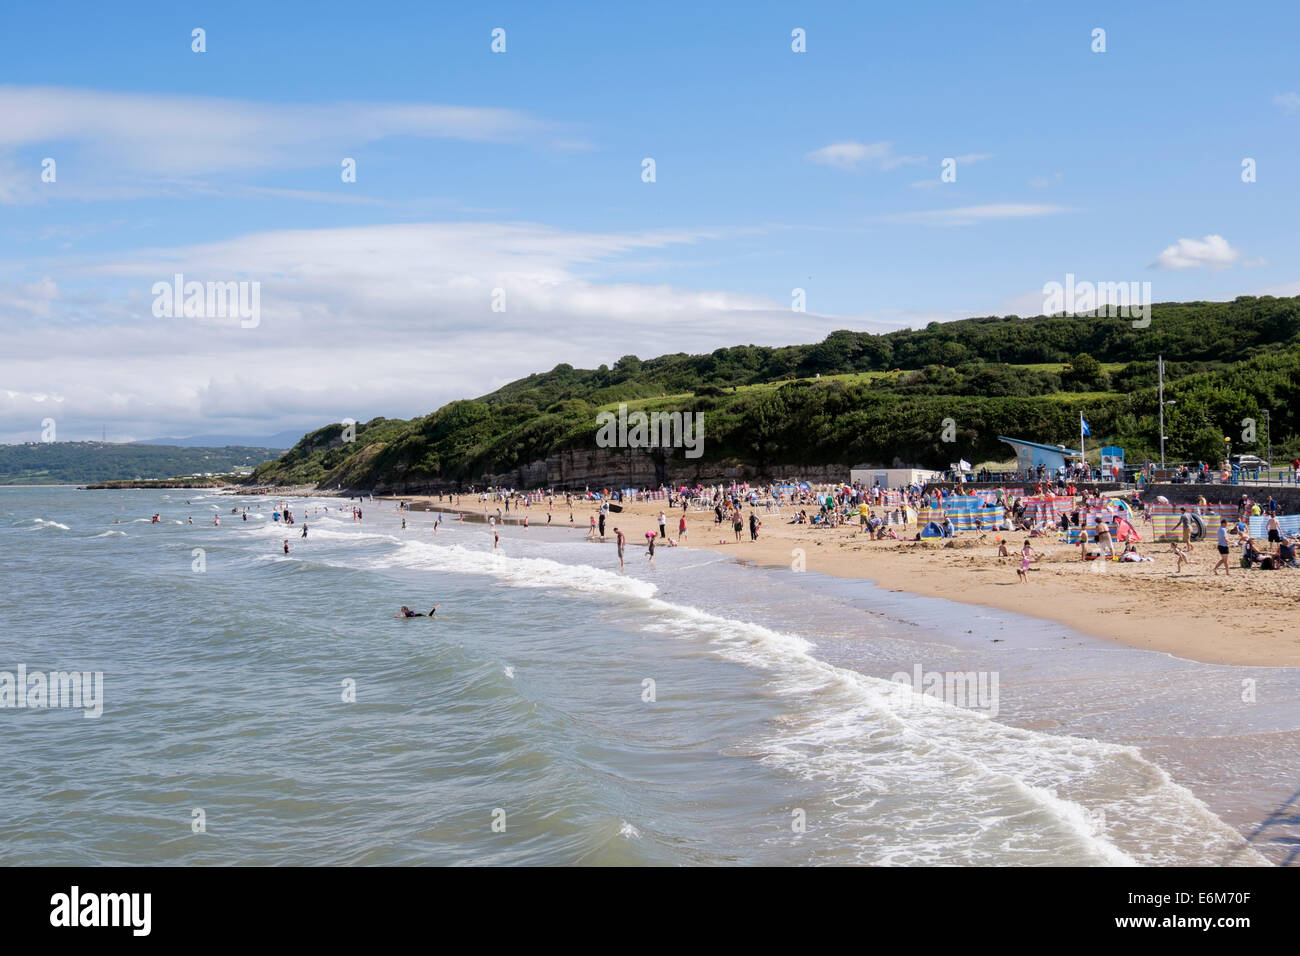 Baden im Meer am belebten Sandstrand bei Flut im Sommer nachmittags Pers. Benllech, Isle of Anglesey, Wales, UK, Großbritannien Stockfoto